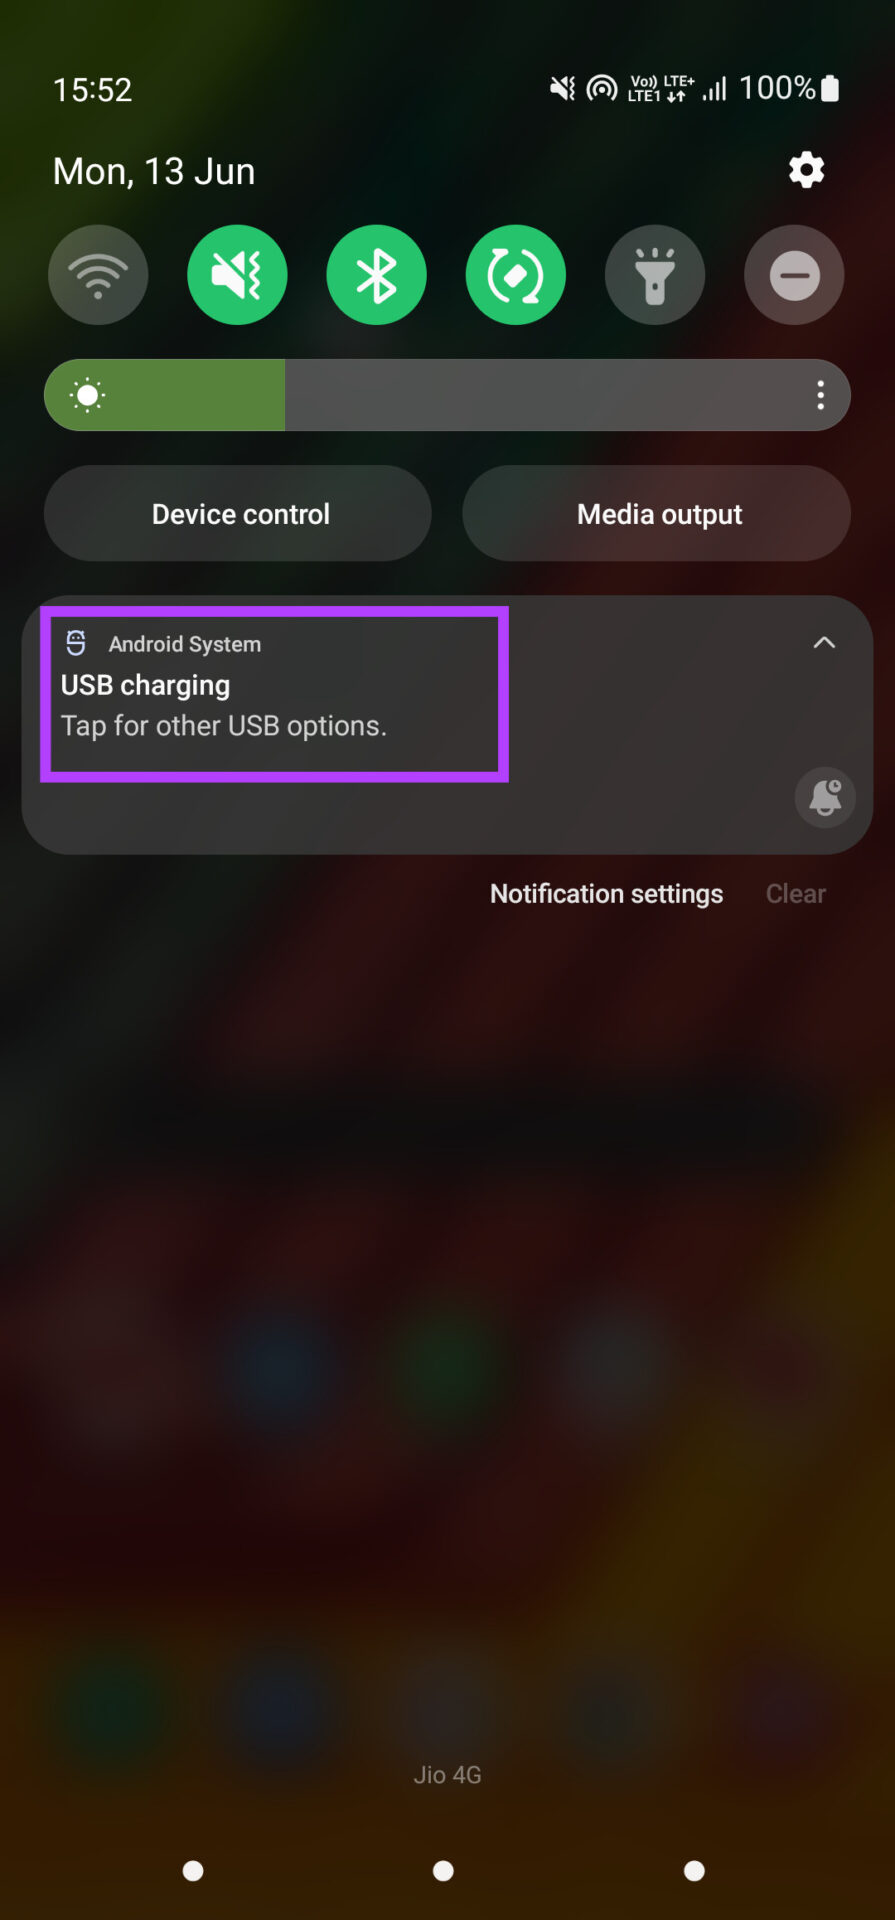 Notificación de conexión USB